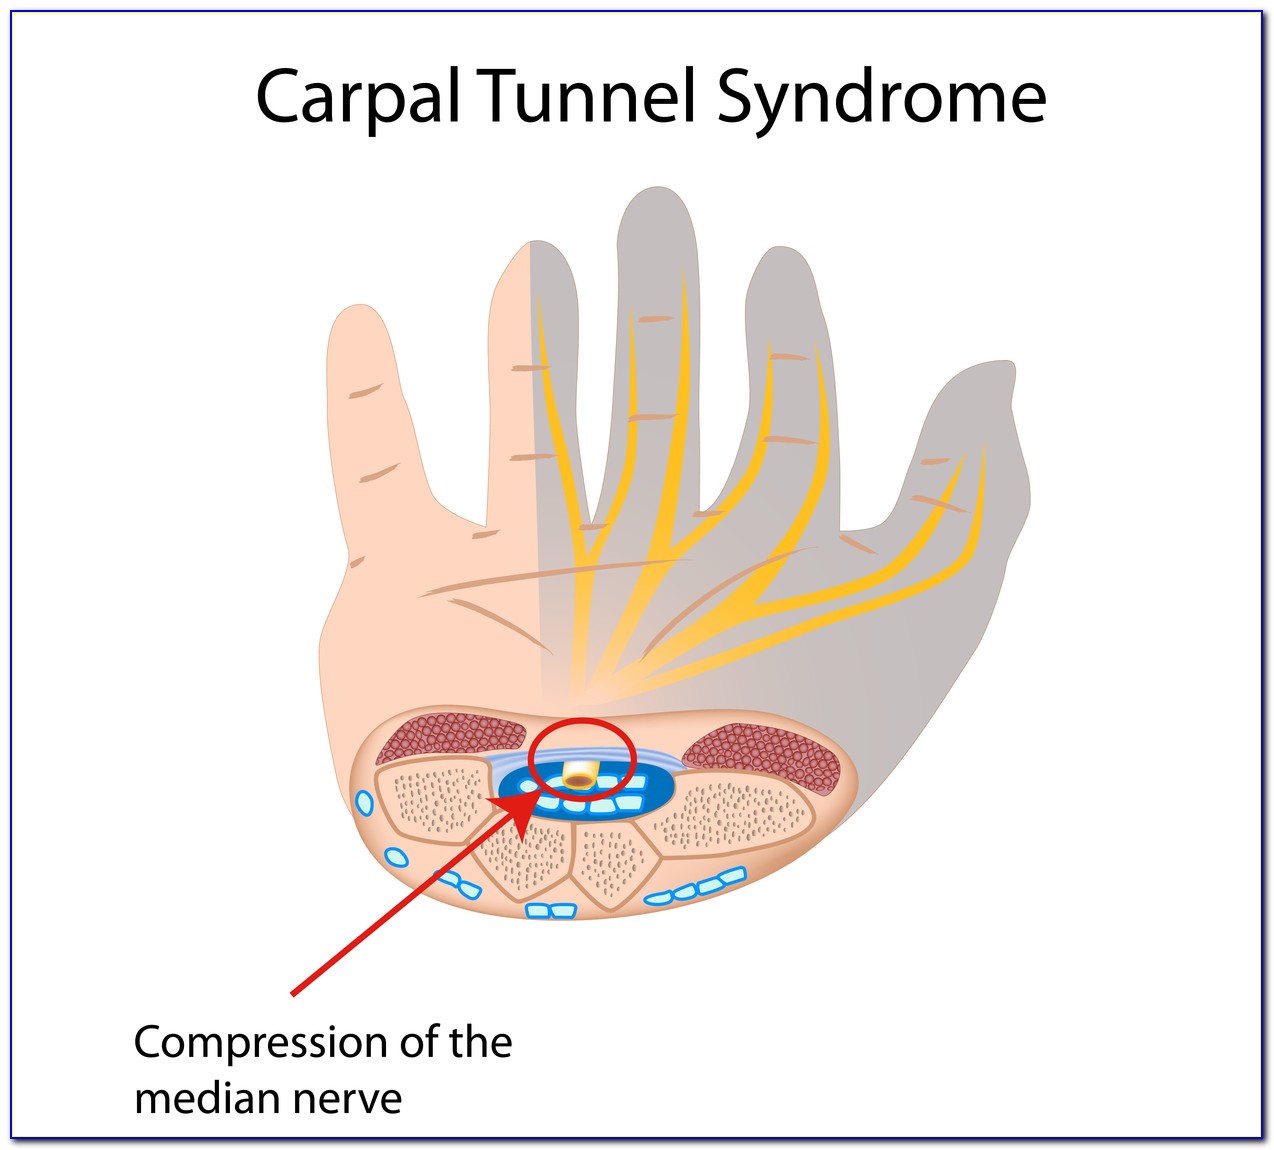 Carpal Tunnel Diagram Wrist